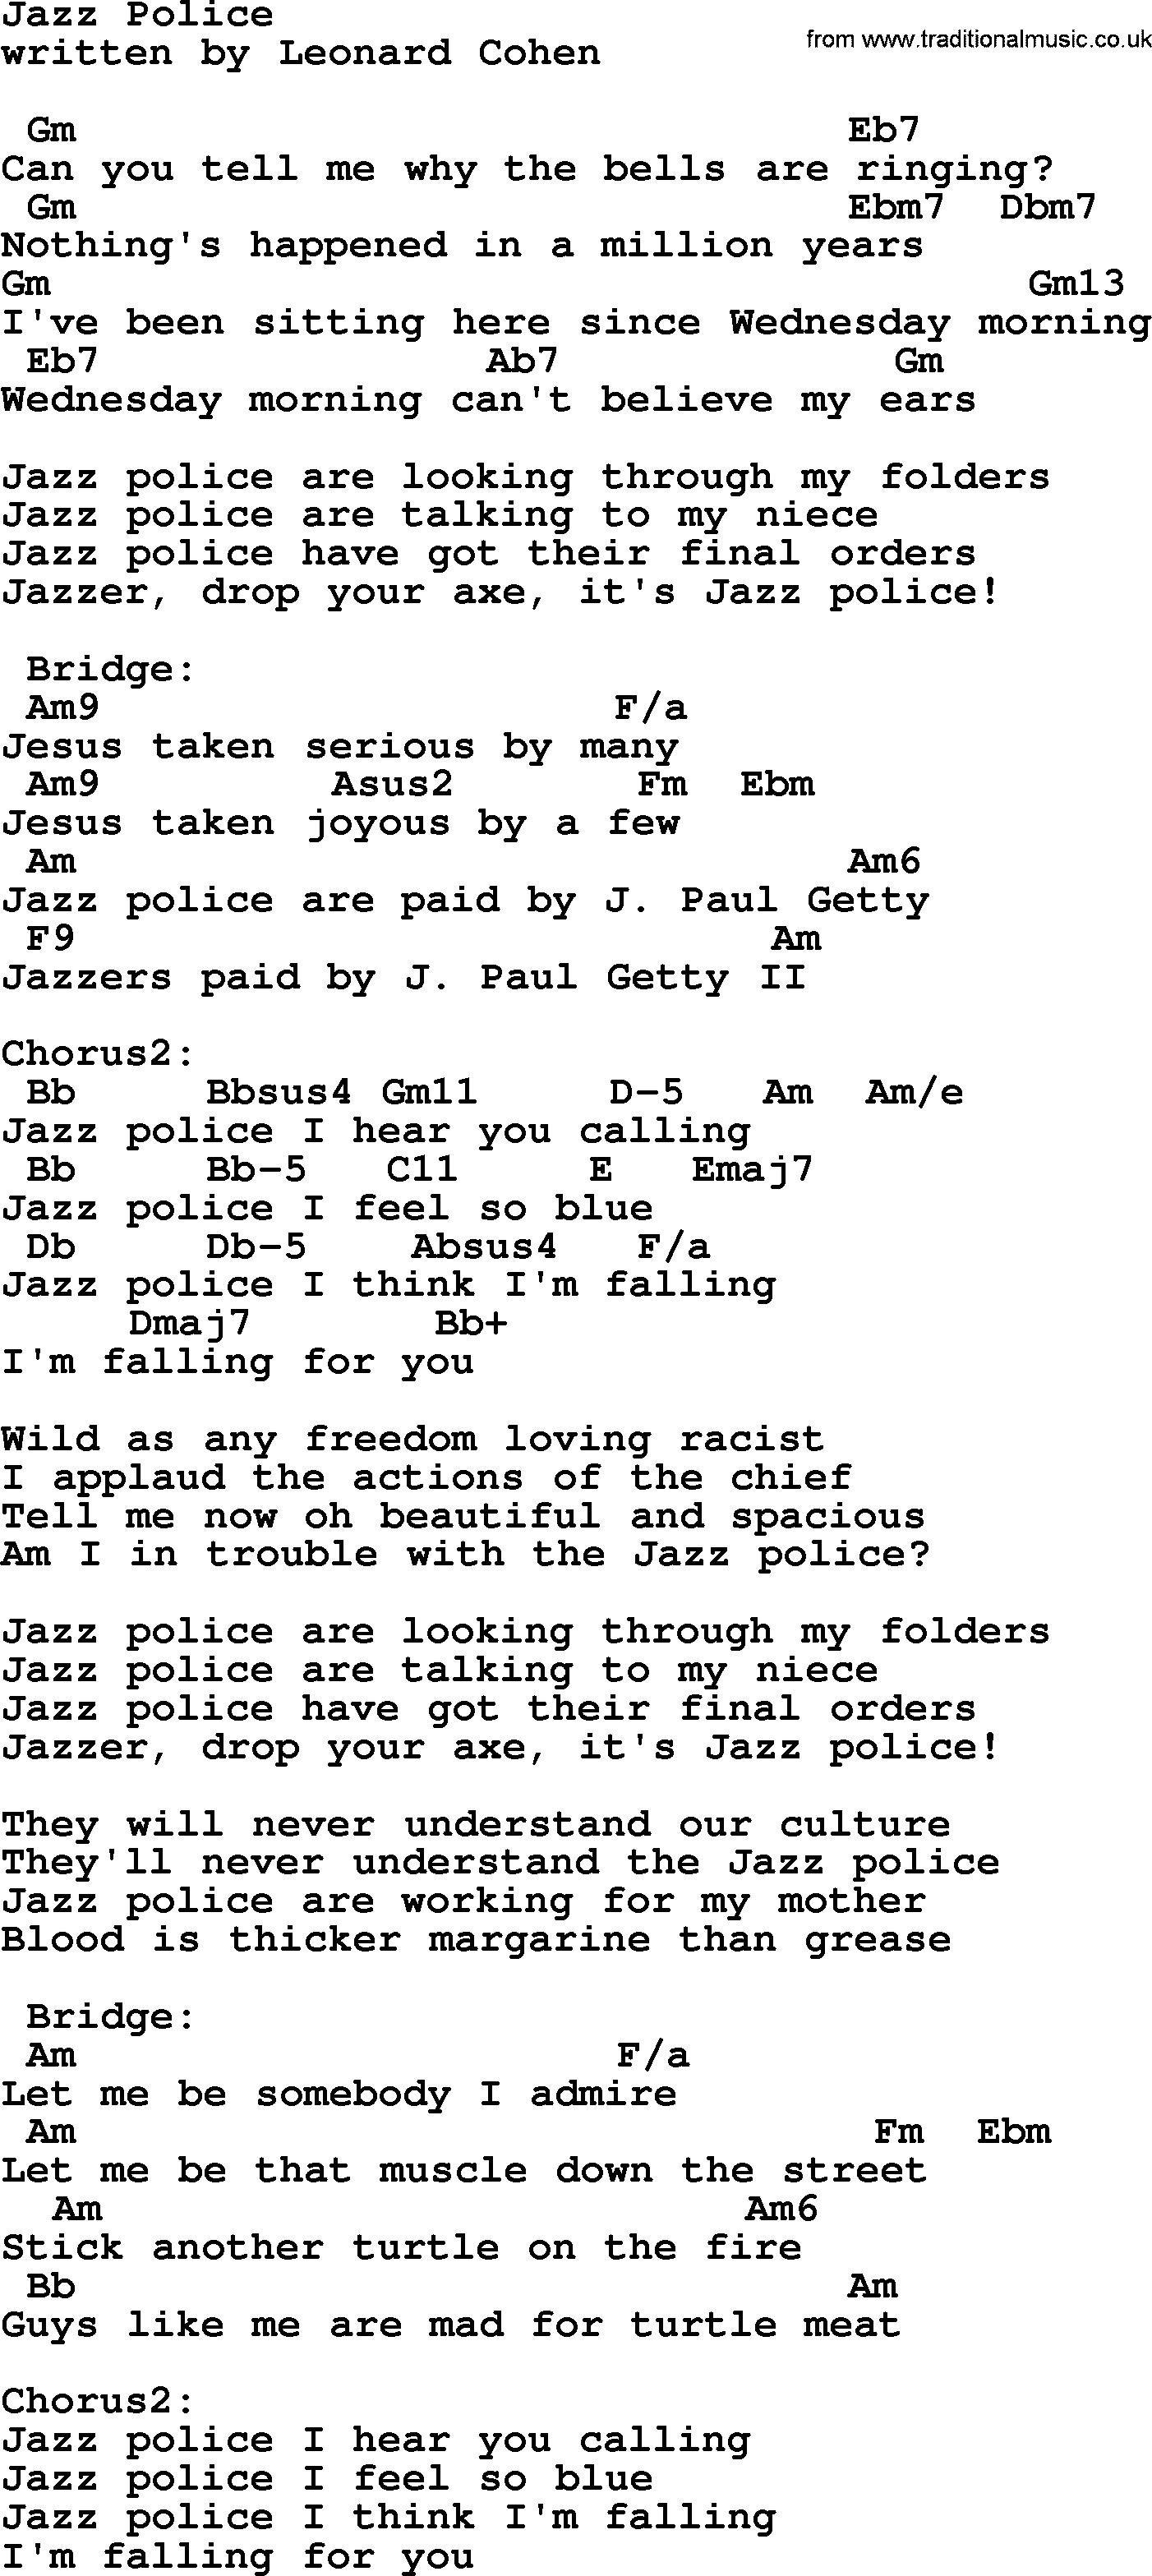 Leonard Cohen song Jazz Police, lyrics and chords